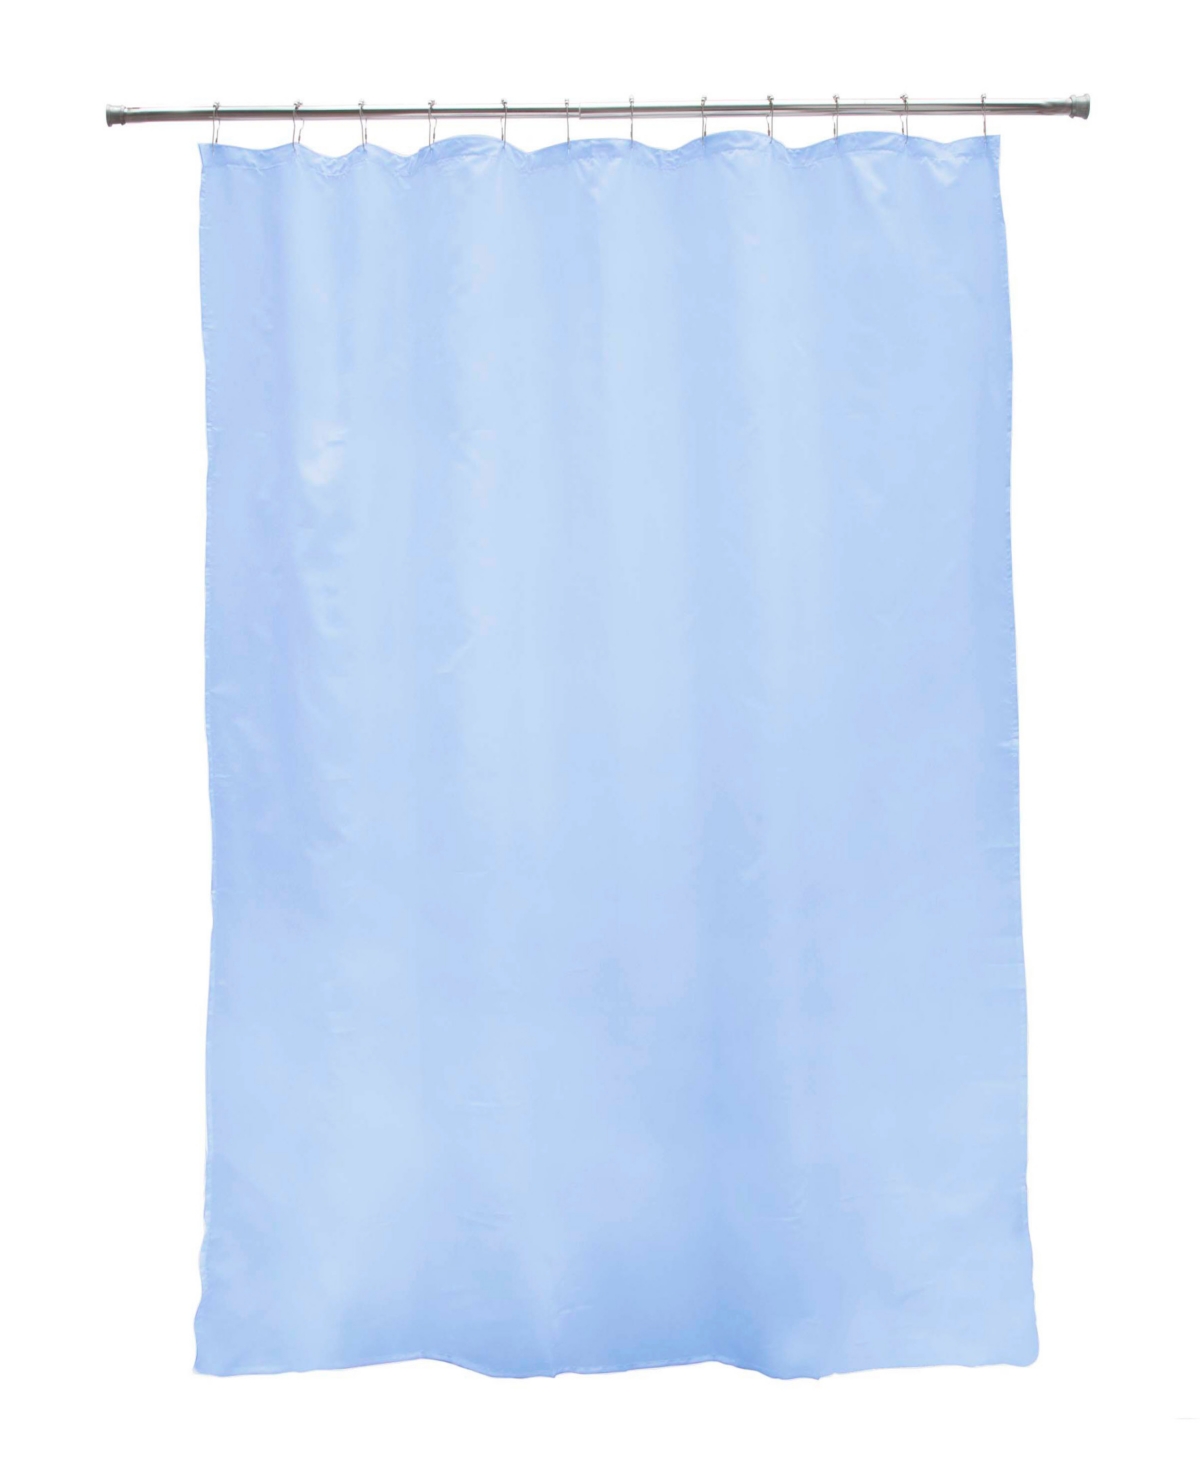 Kenney Medium Weight Peva Shower Curtain Liner In Blue